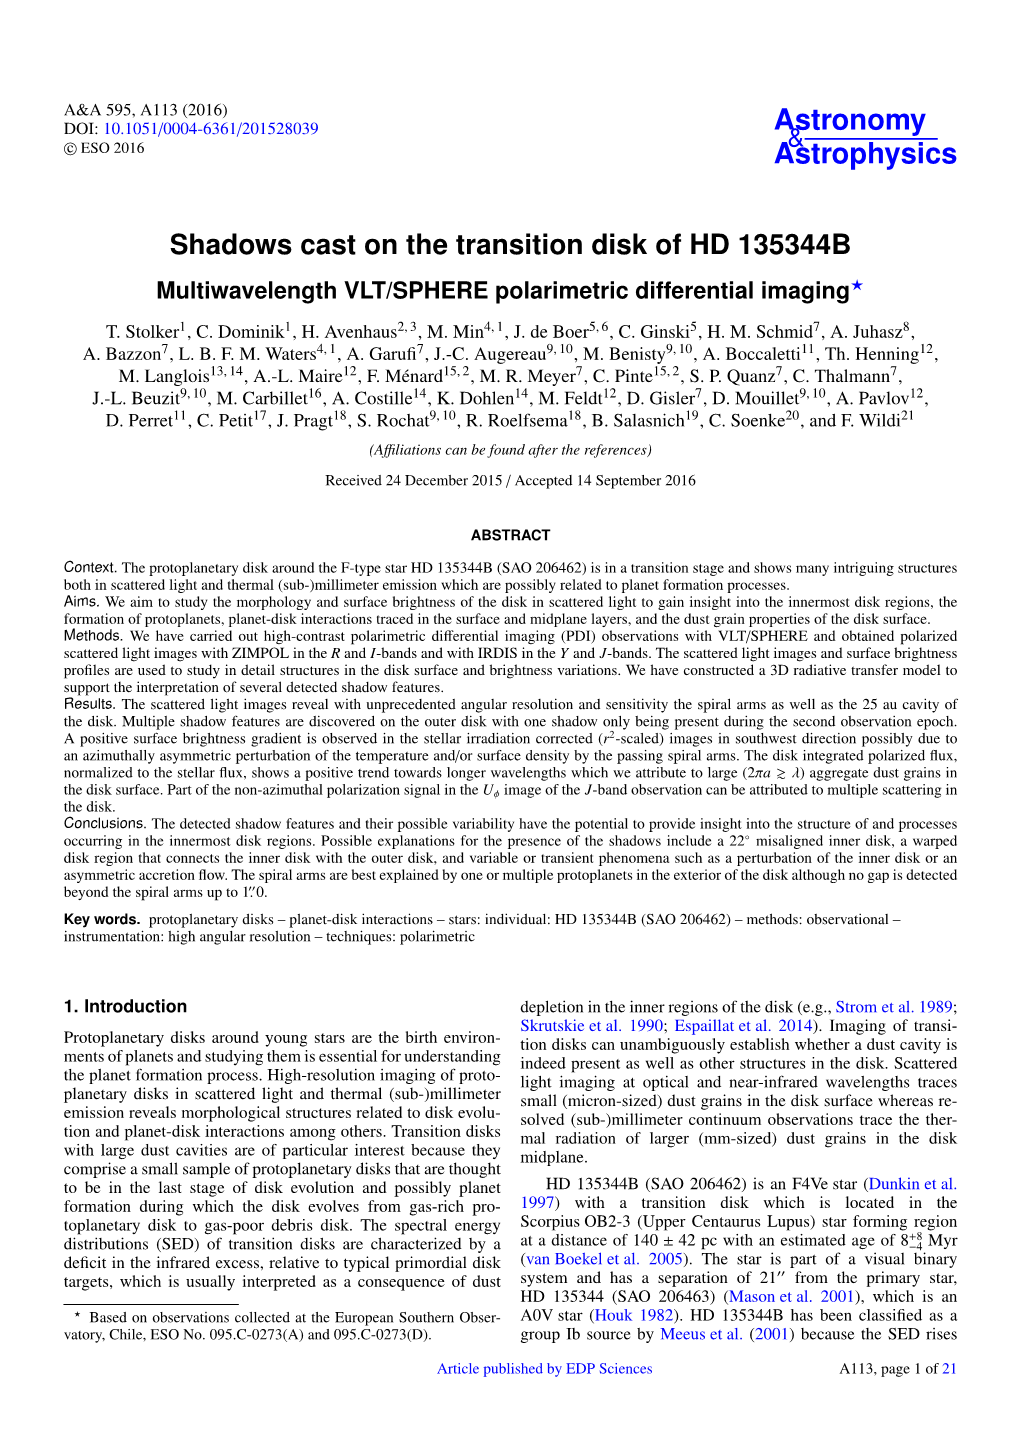 Shadows Cast on the Transition Disk of HD 135344B Multiwavelength VLT/SPHERE Polarimetric Differential Imaging?